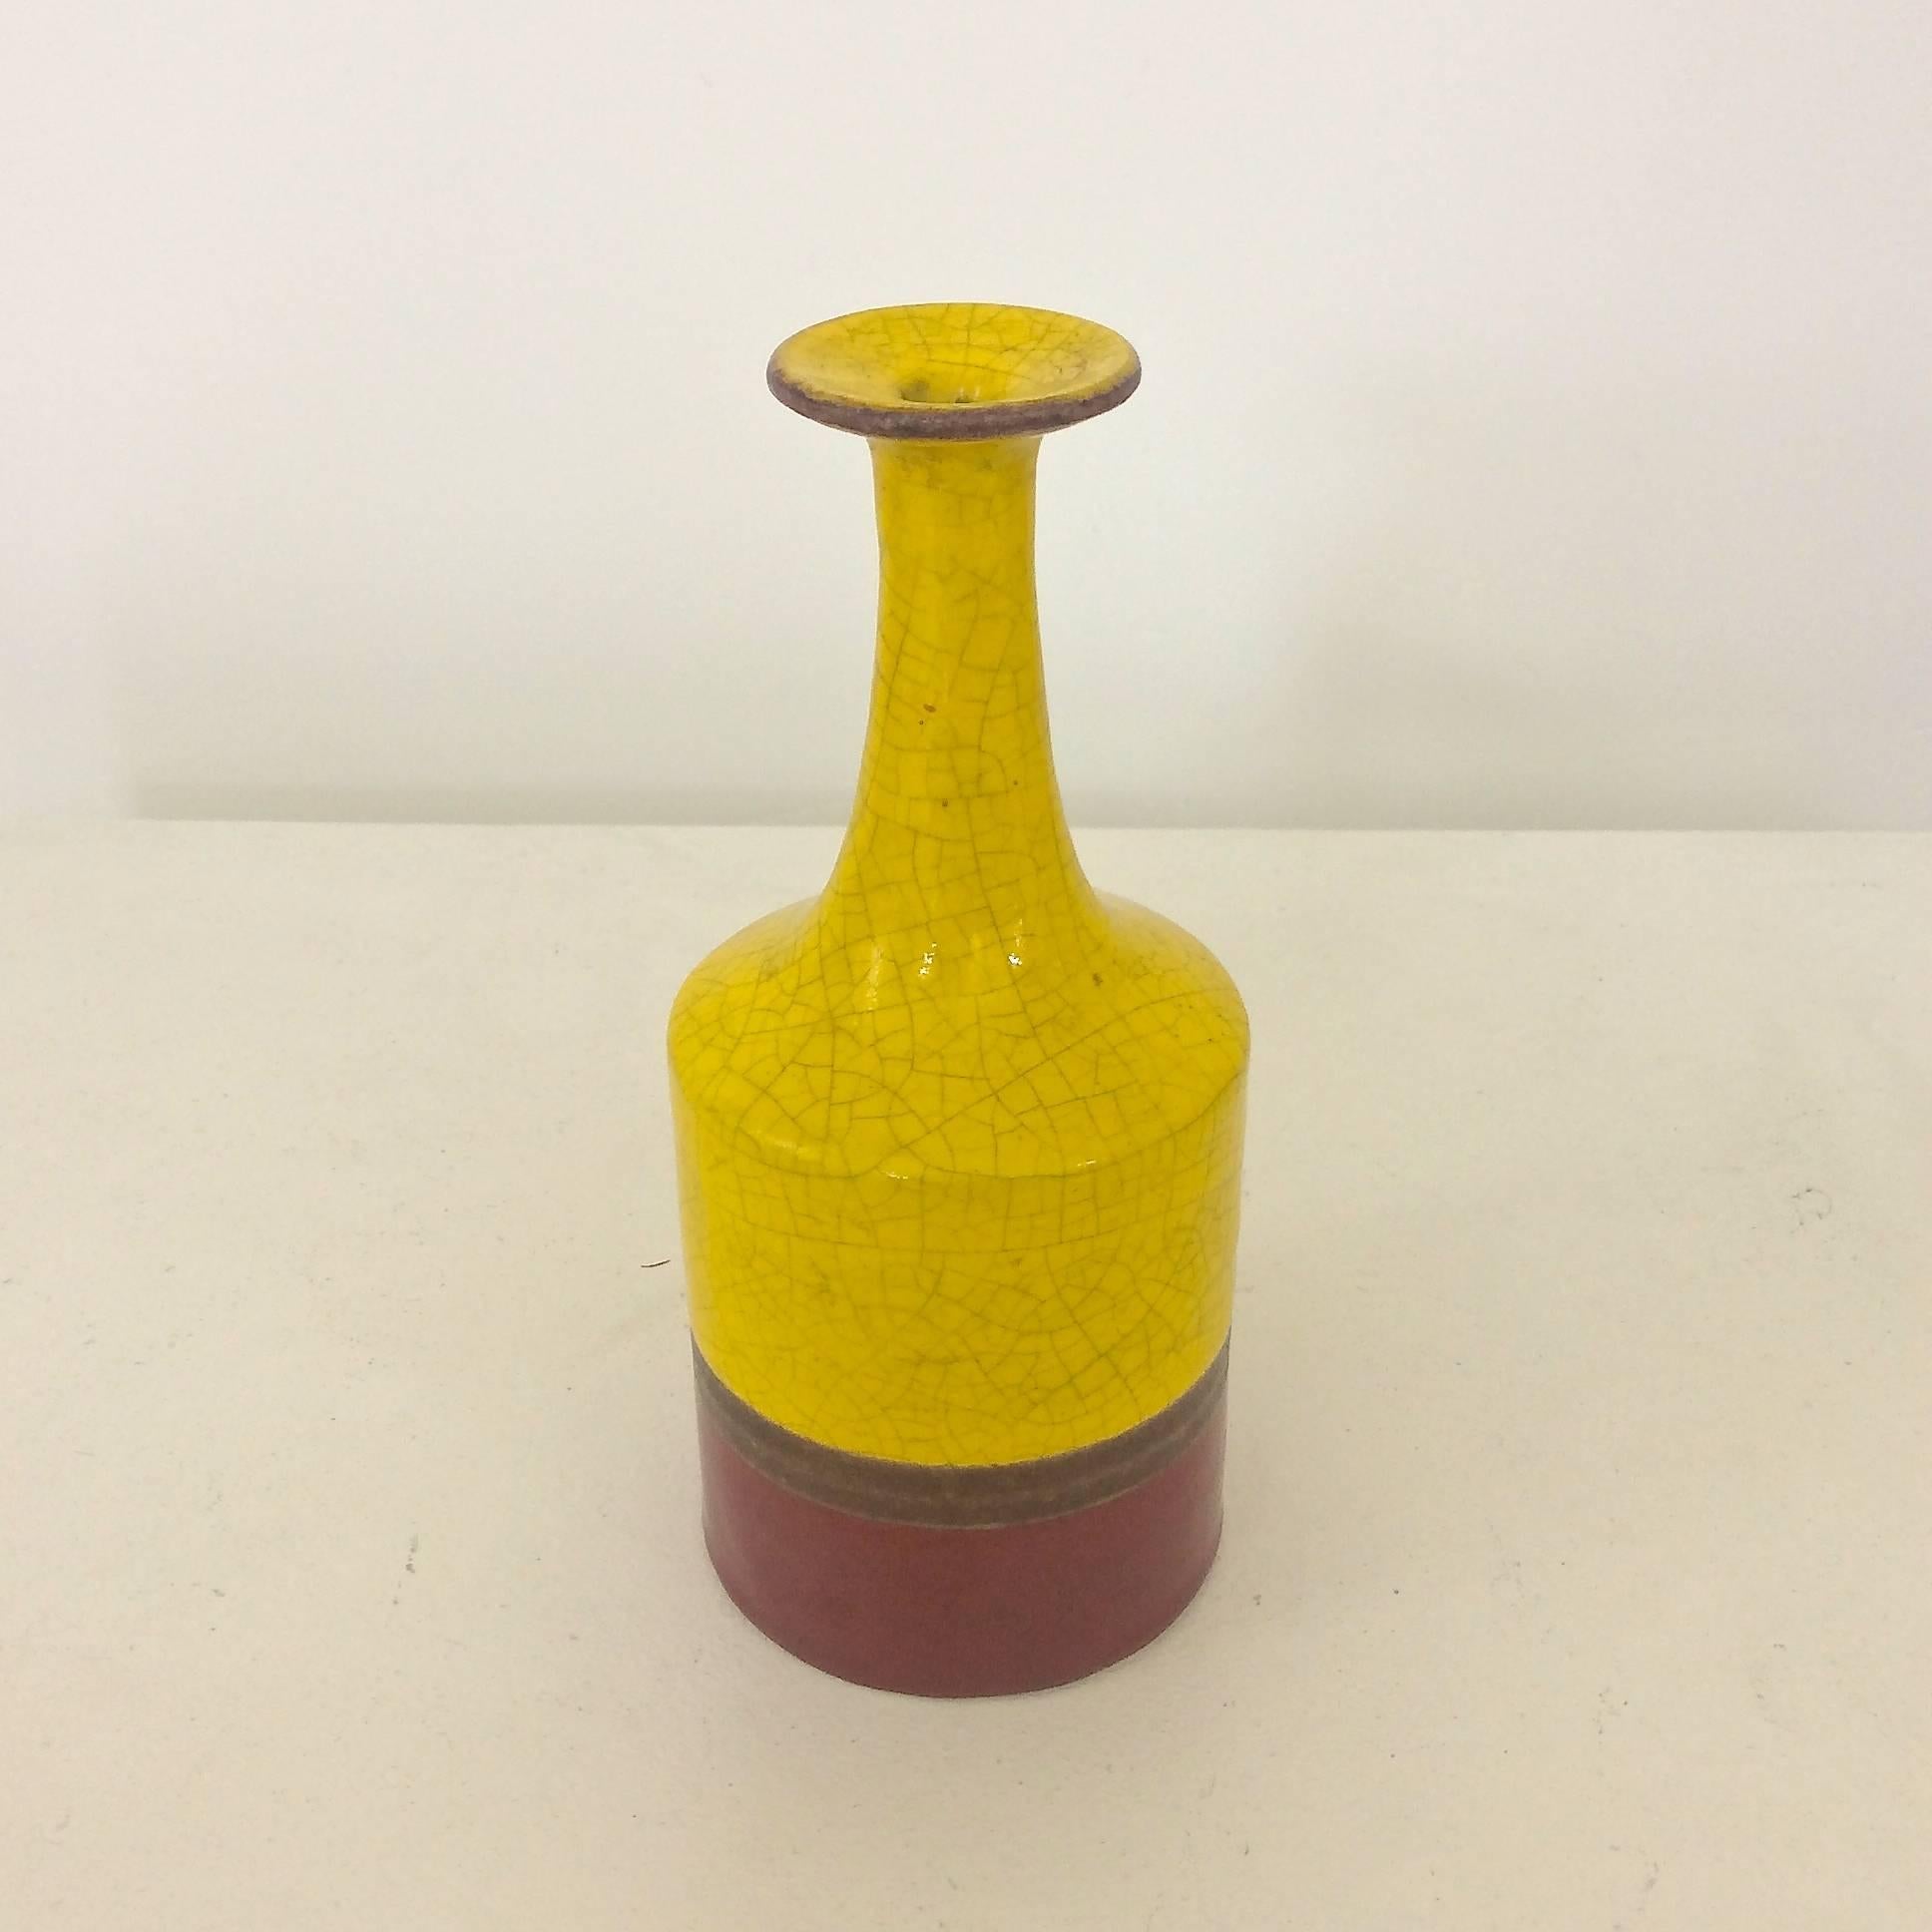 Guido Gambone glazed ceramic, circa 1950, Italy.
Luminous yellow, brown and dark red.
Signed underside.
Measures: 19 cm height, 8 cm diameter.
Good original condition.